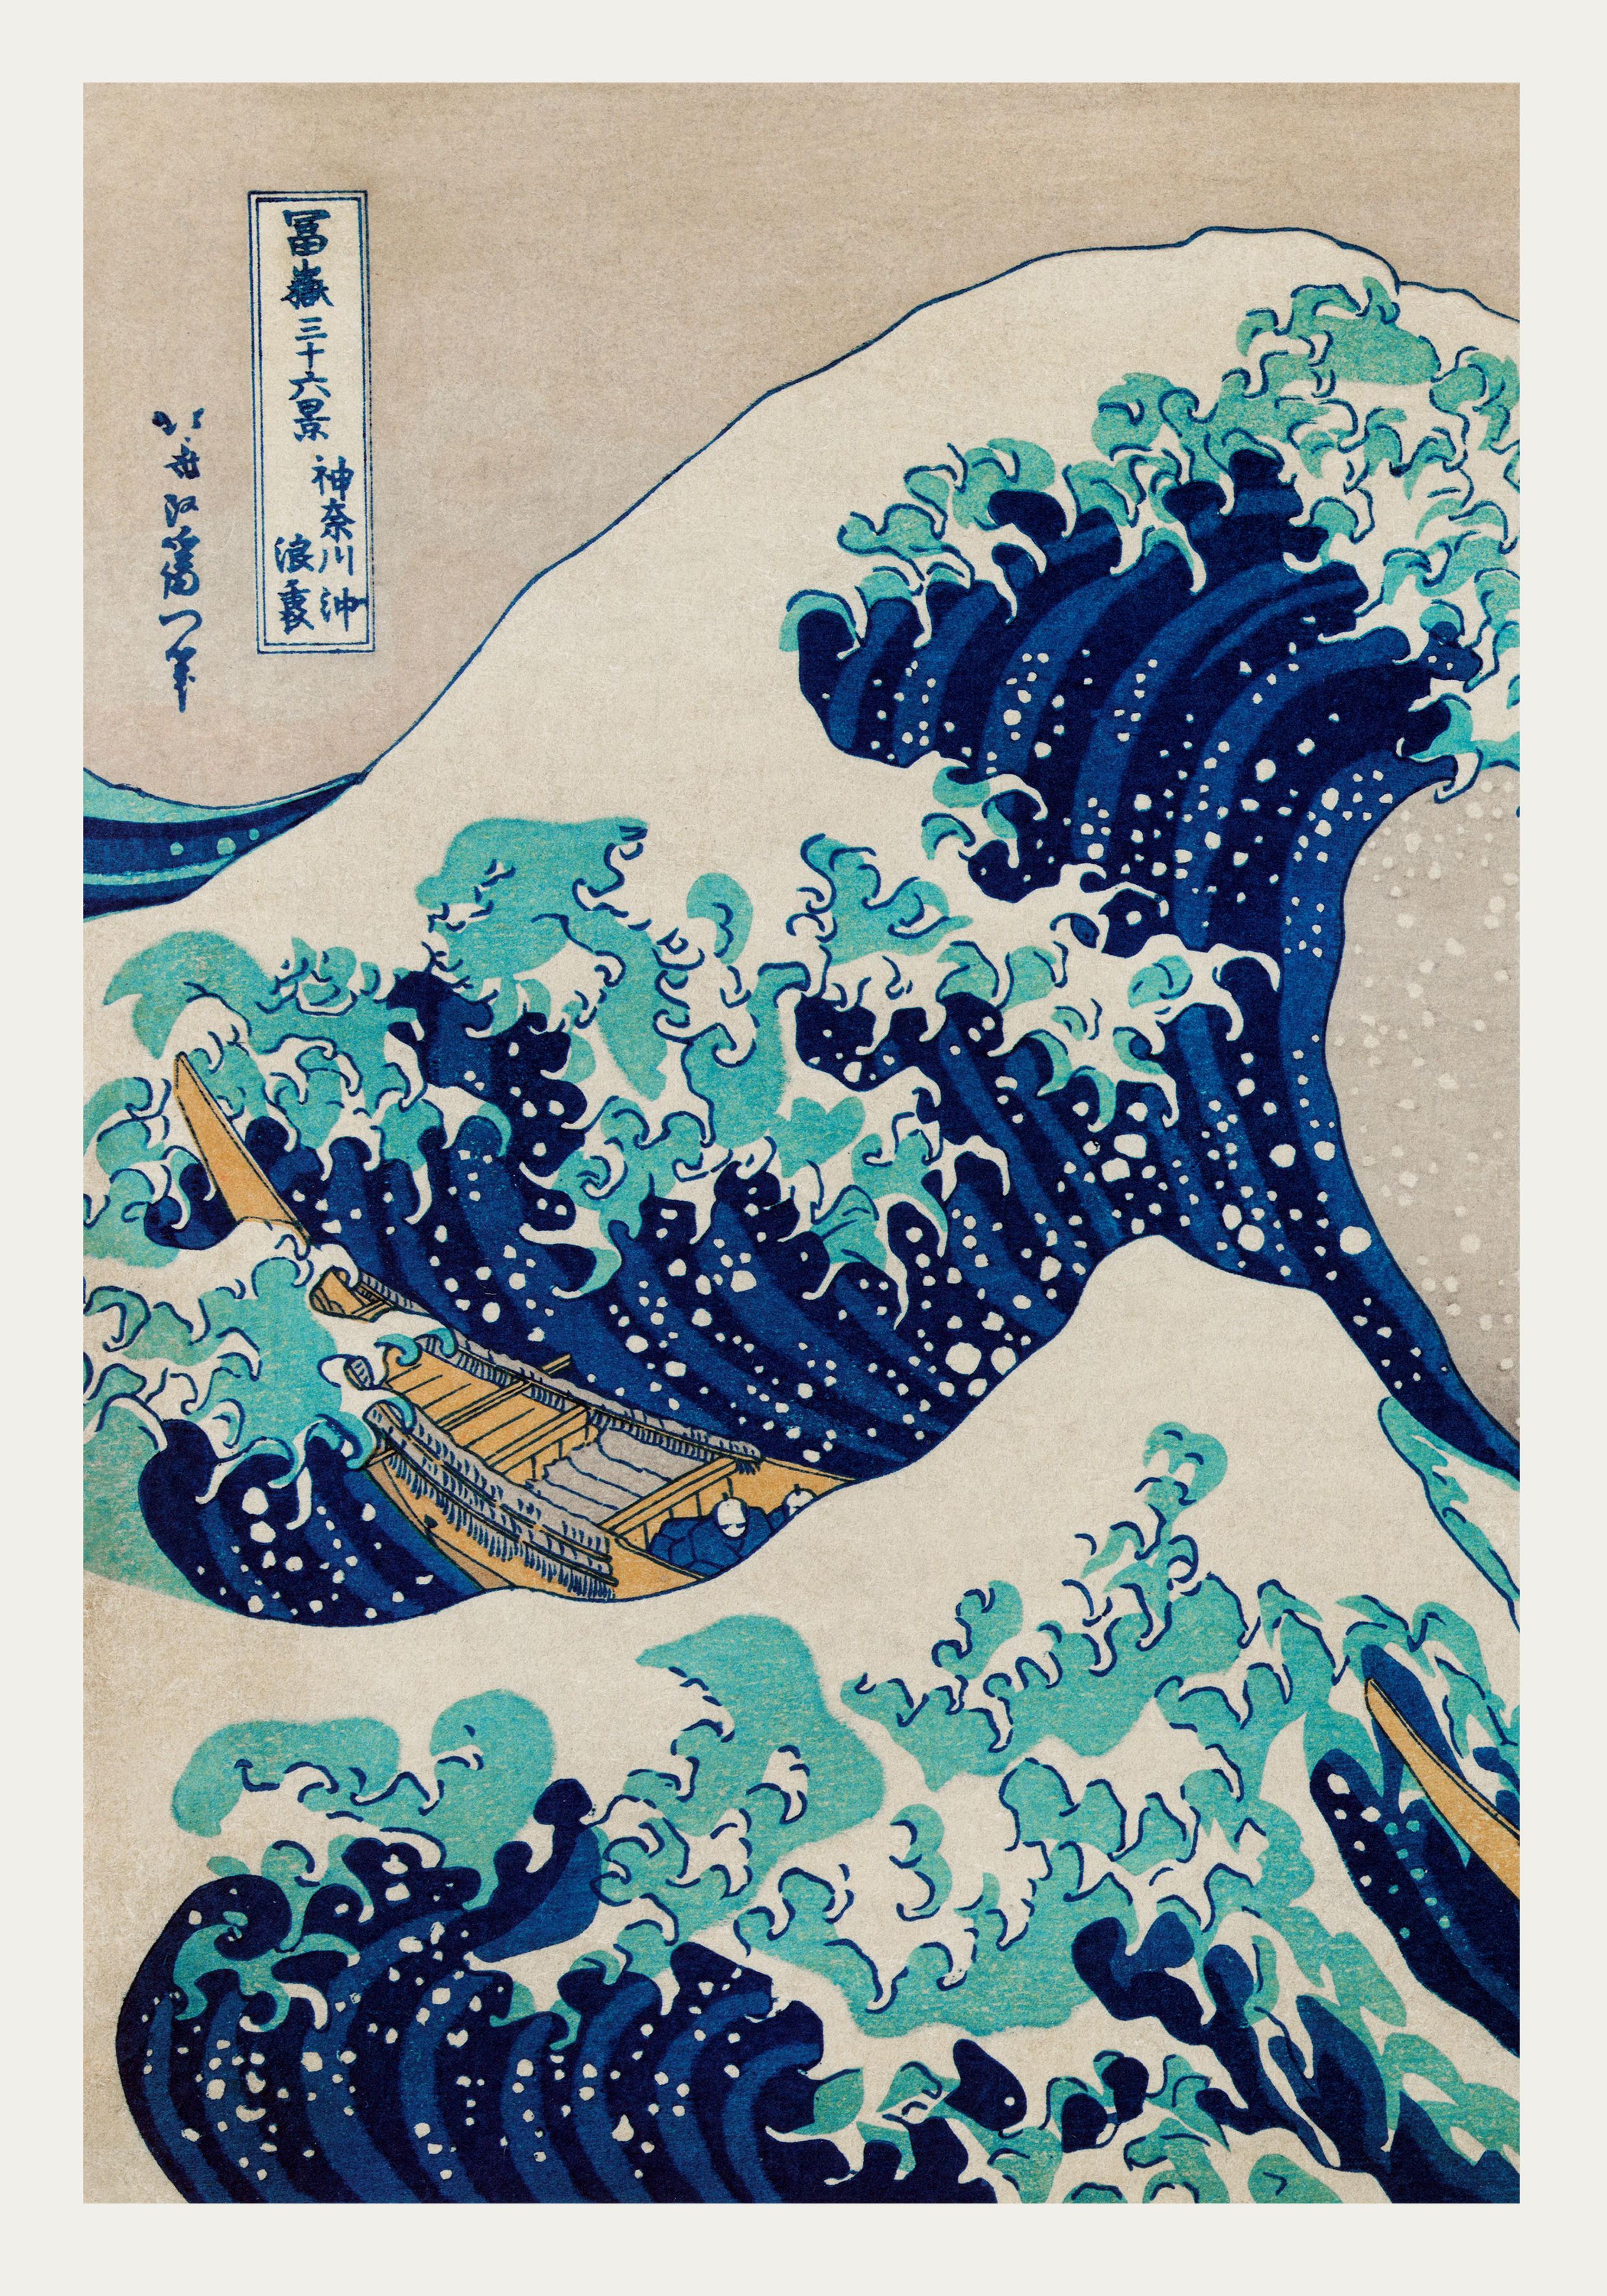 Katsushika Hokusai's The Great Wave off Kanagawa